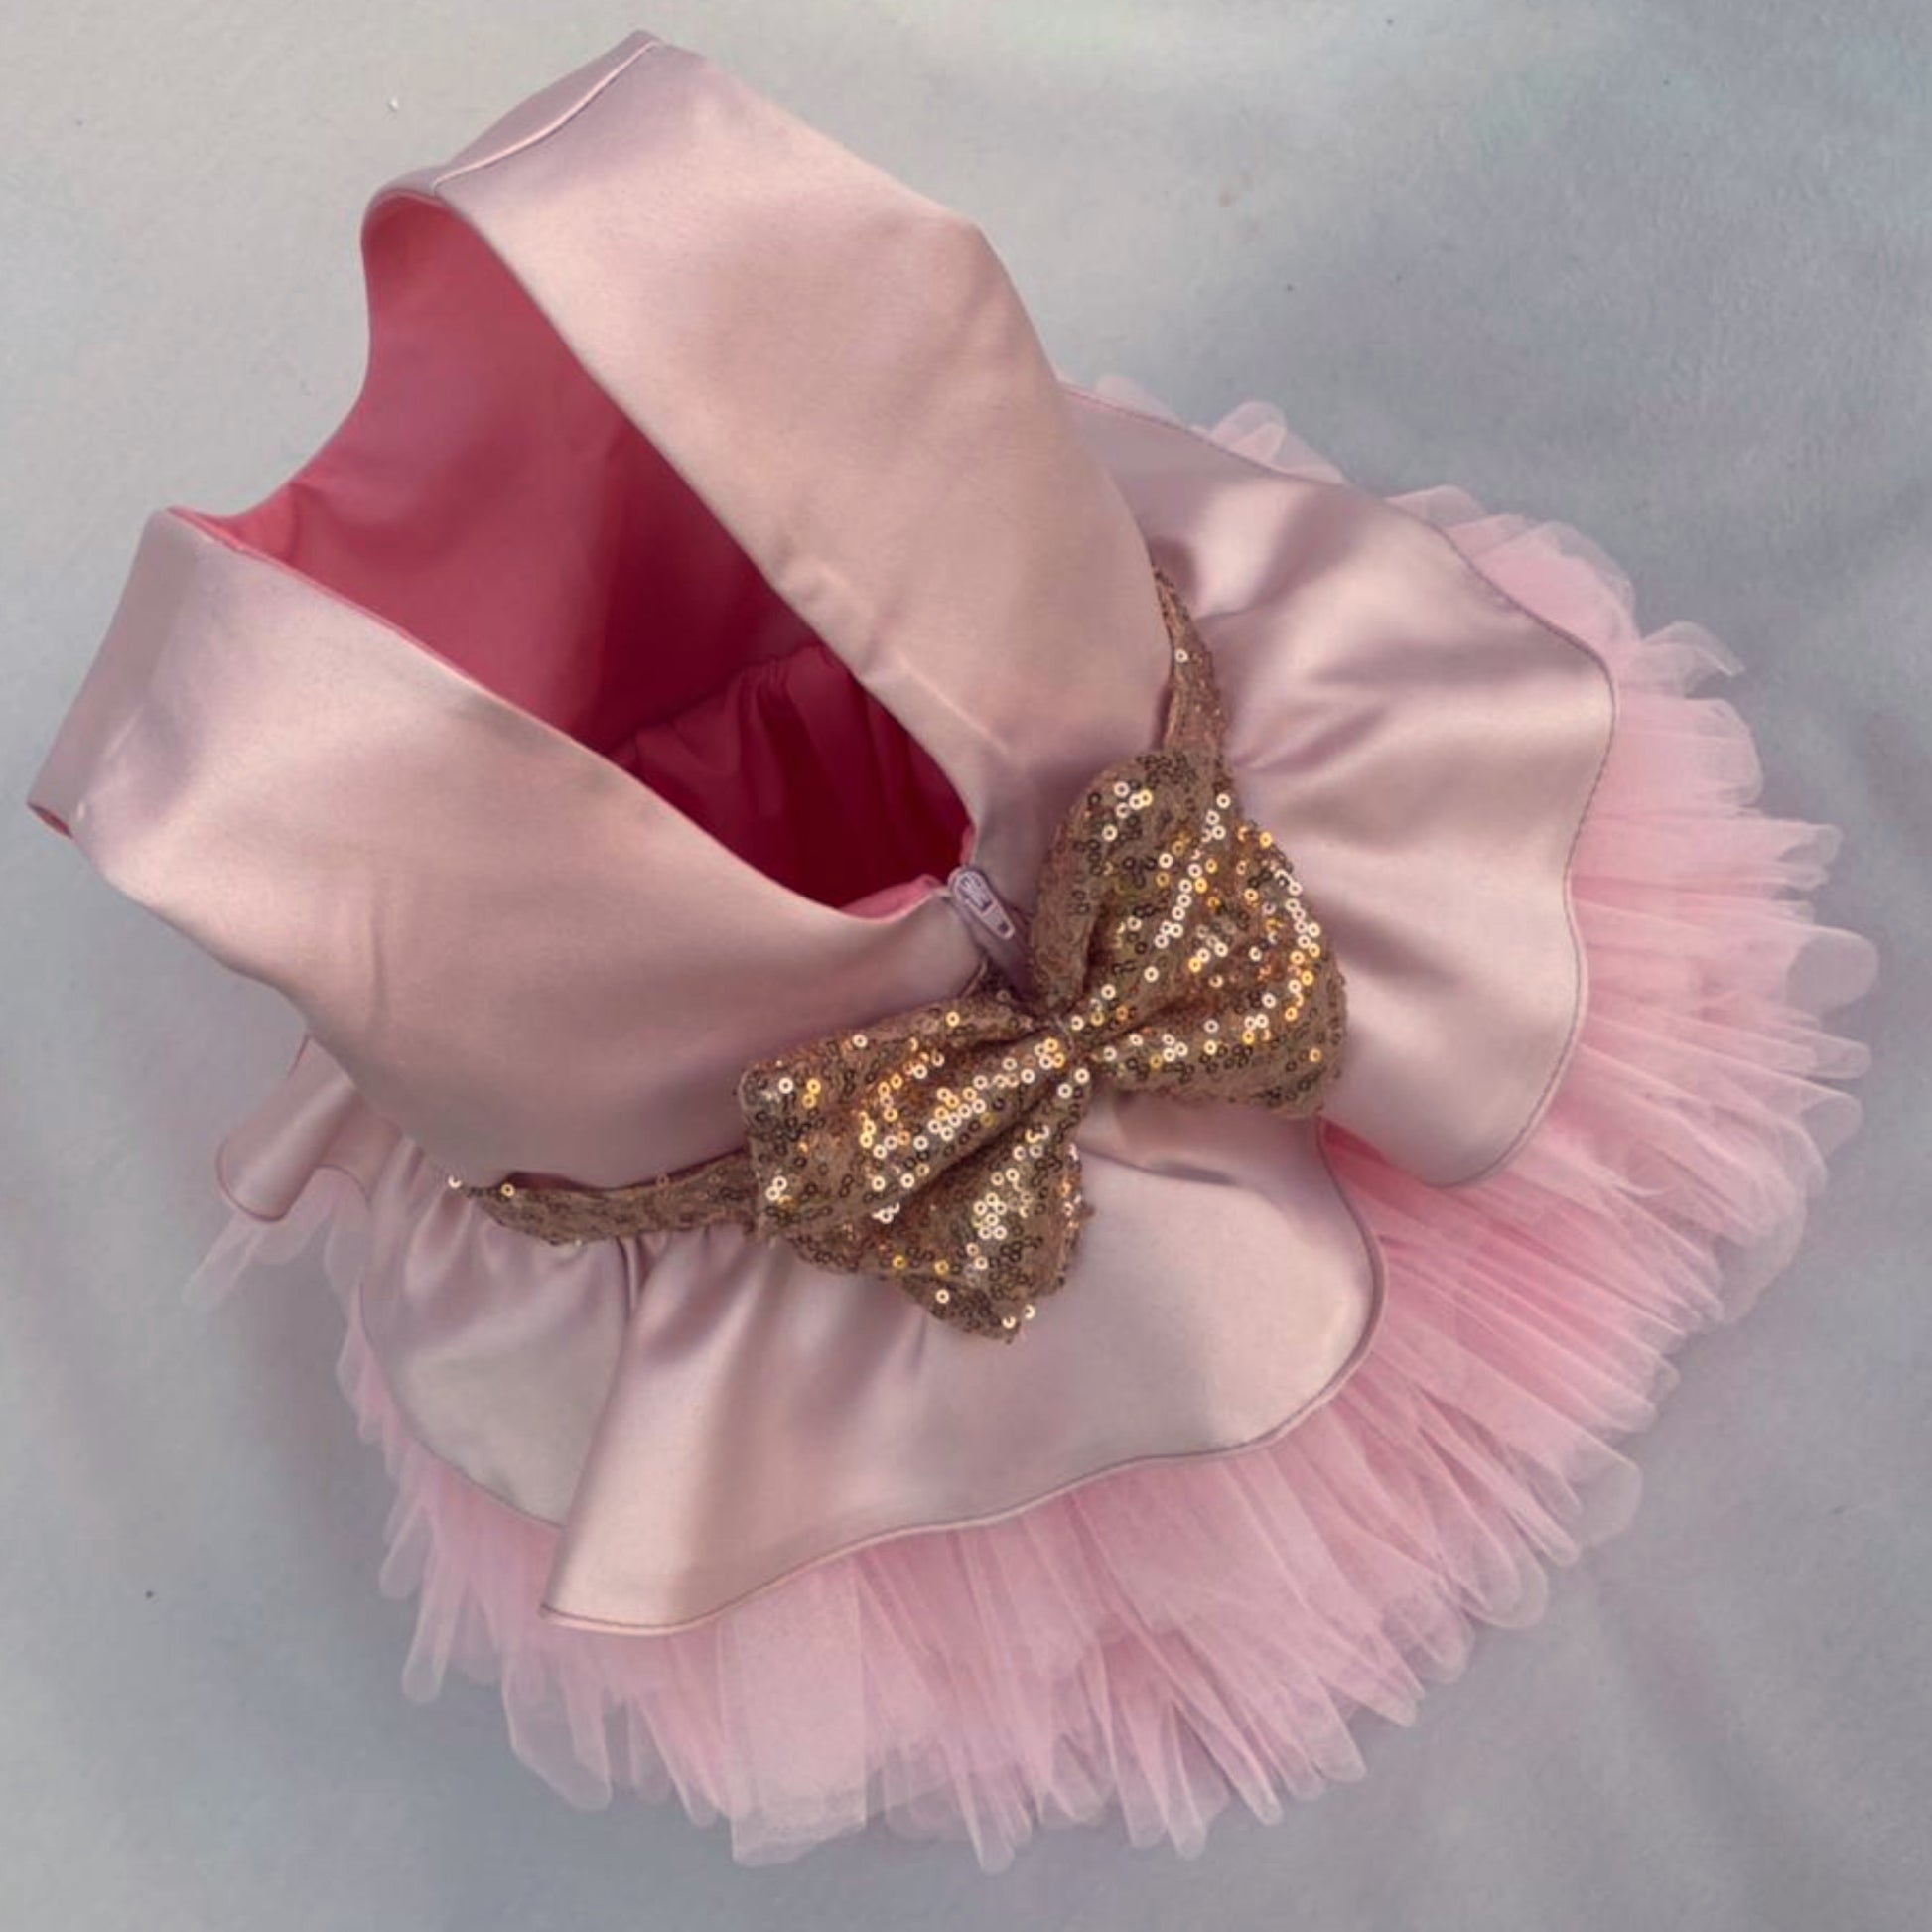 Dakota pink peplum tutu dress